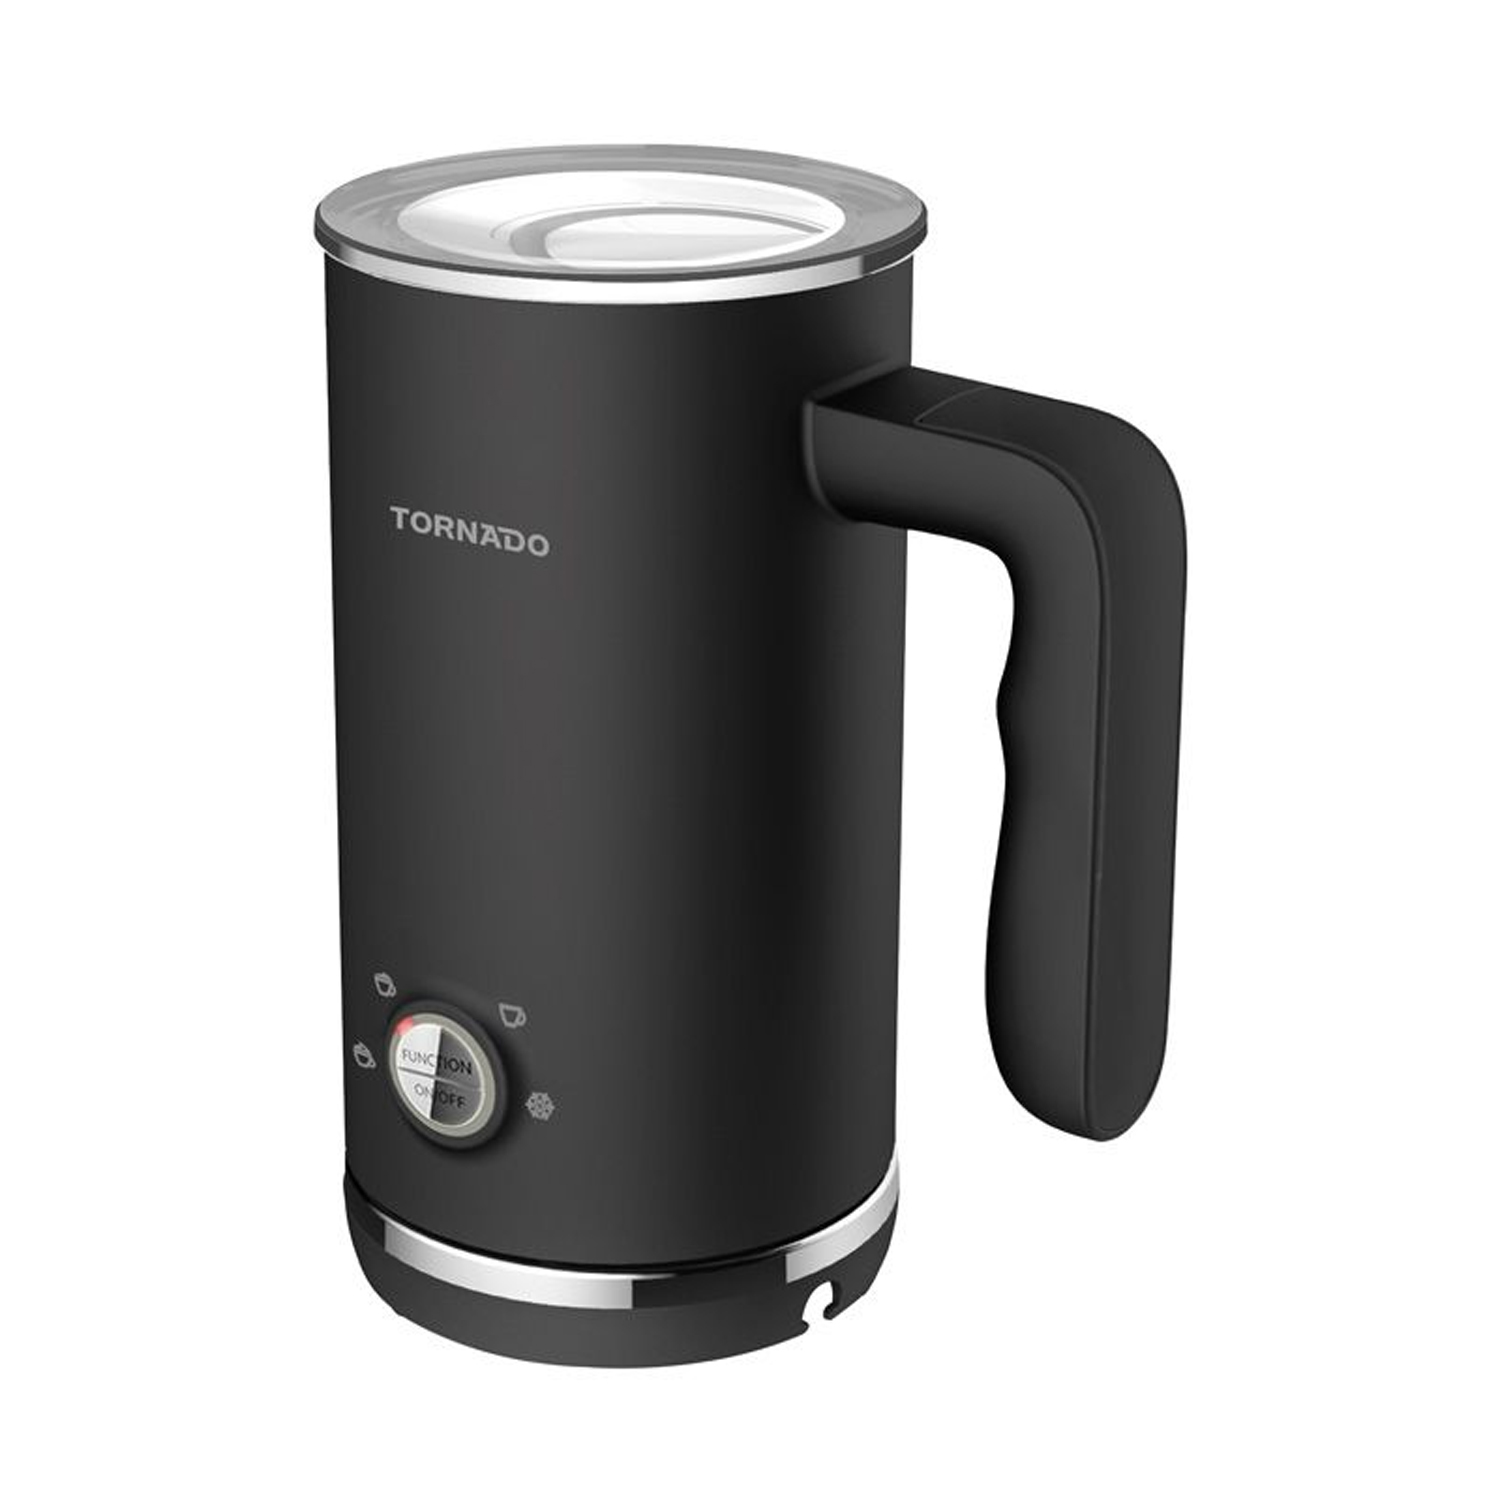 https://aghezty.com/en/products/Coffee---Espresso-Makers/Black-Decker-Coffee-Machine-Travel-Mug650-WBlack-DCT10-B5-25413/uploads/product/2021-05-05/32.jpg